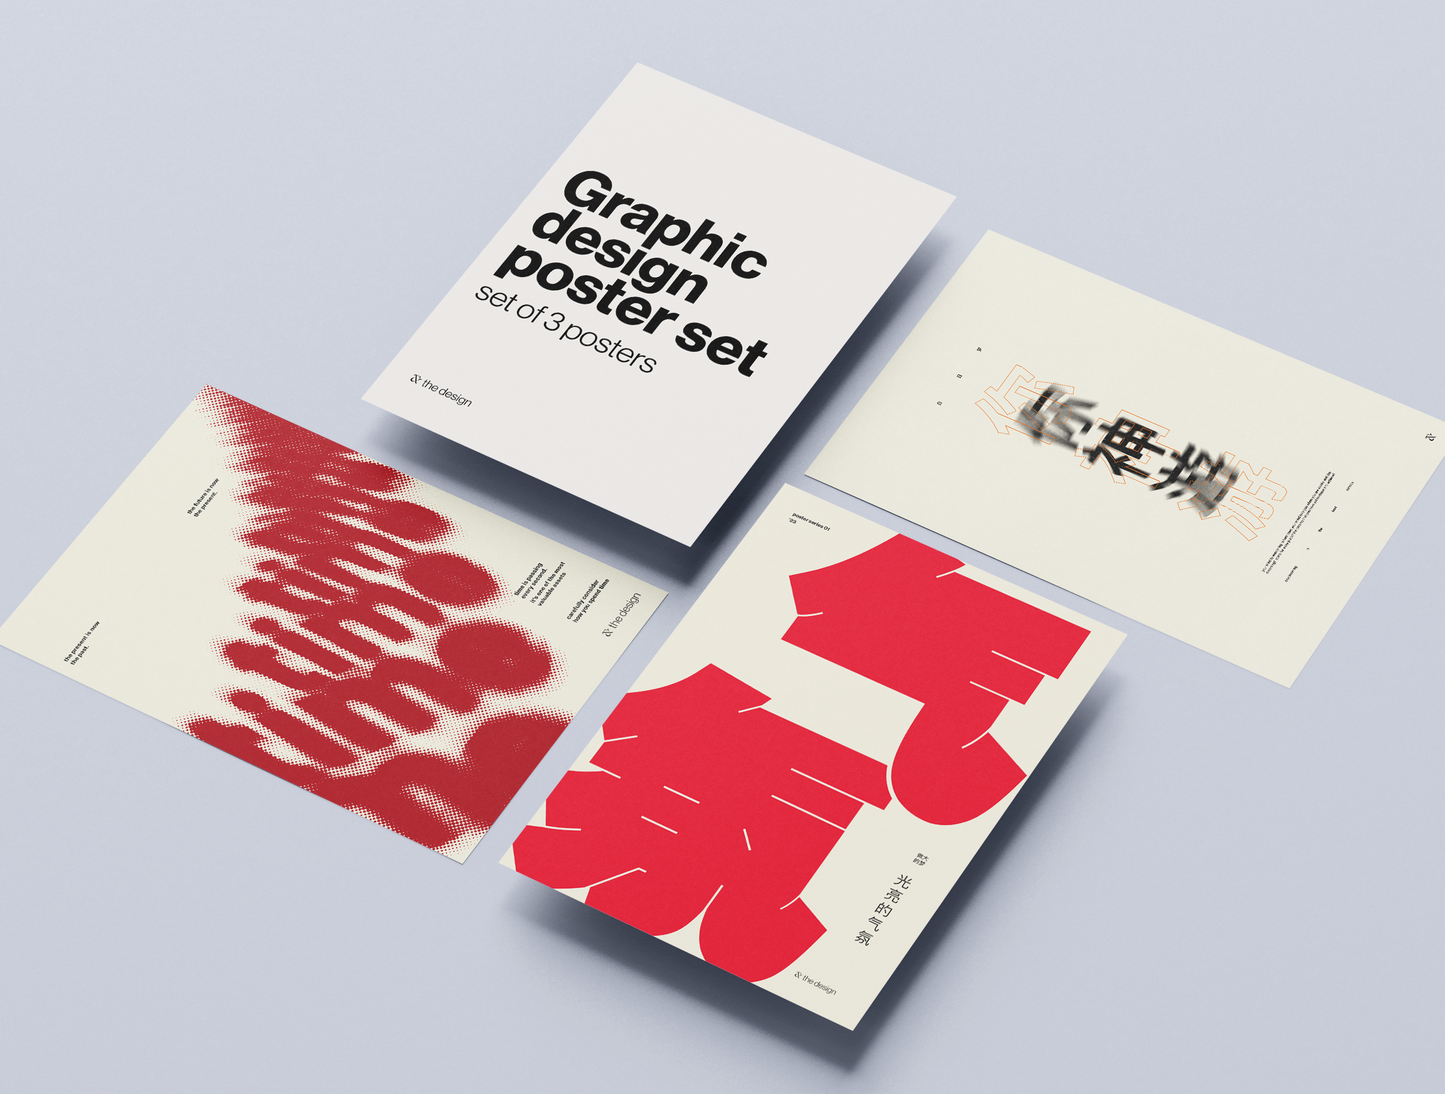 Graphic design poster set